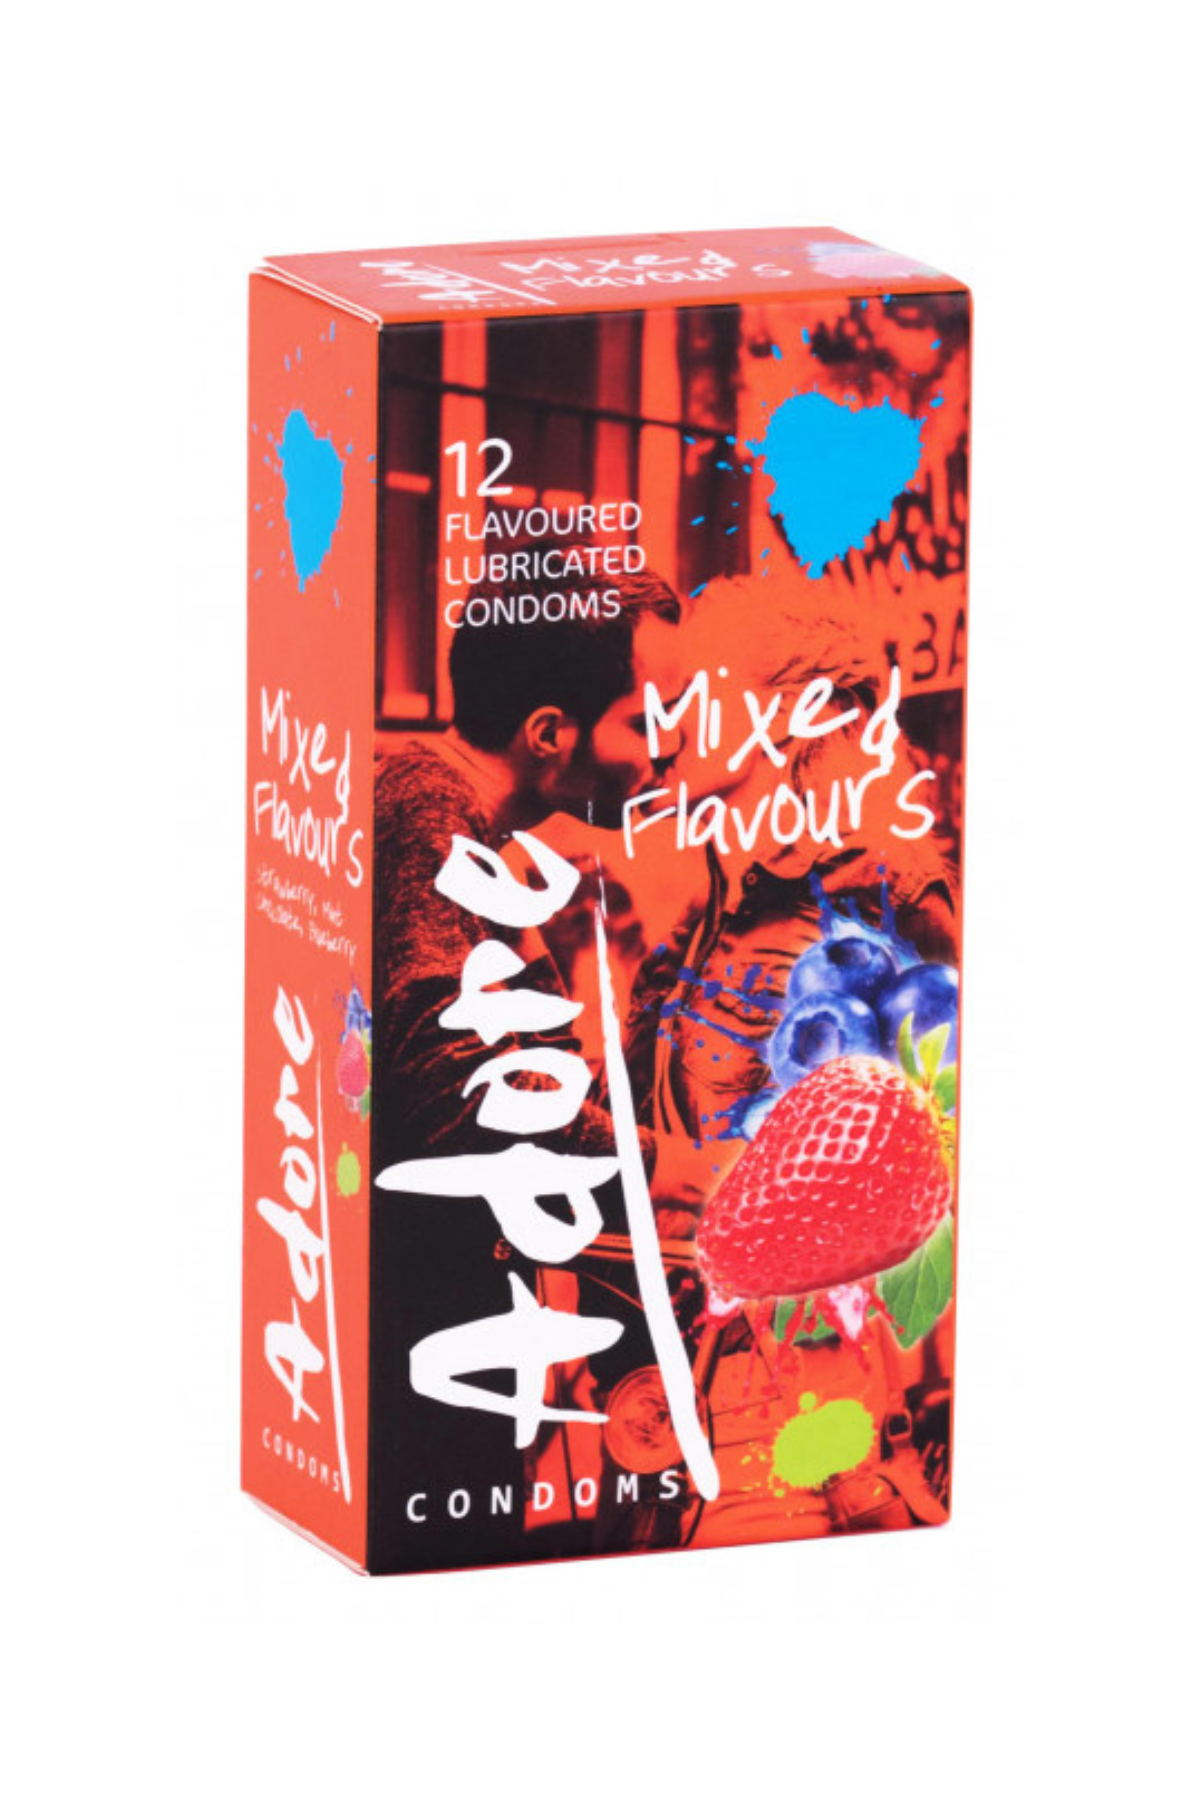 Adore Flavours Condoms 12 Pack